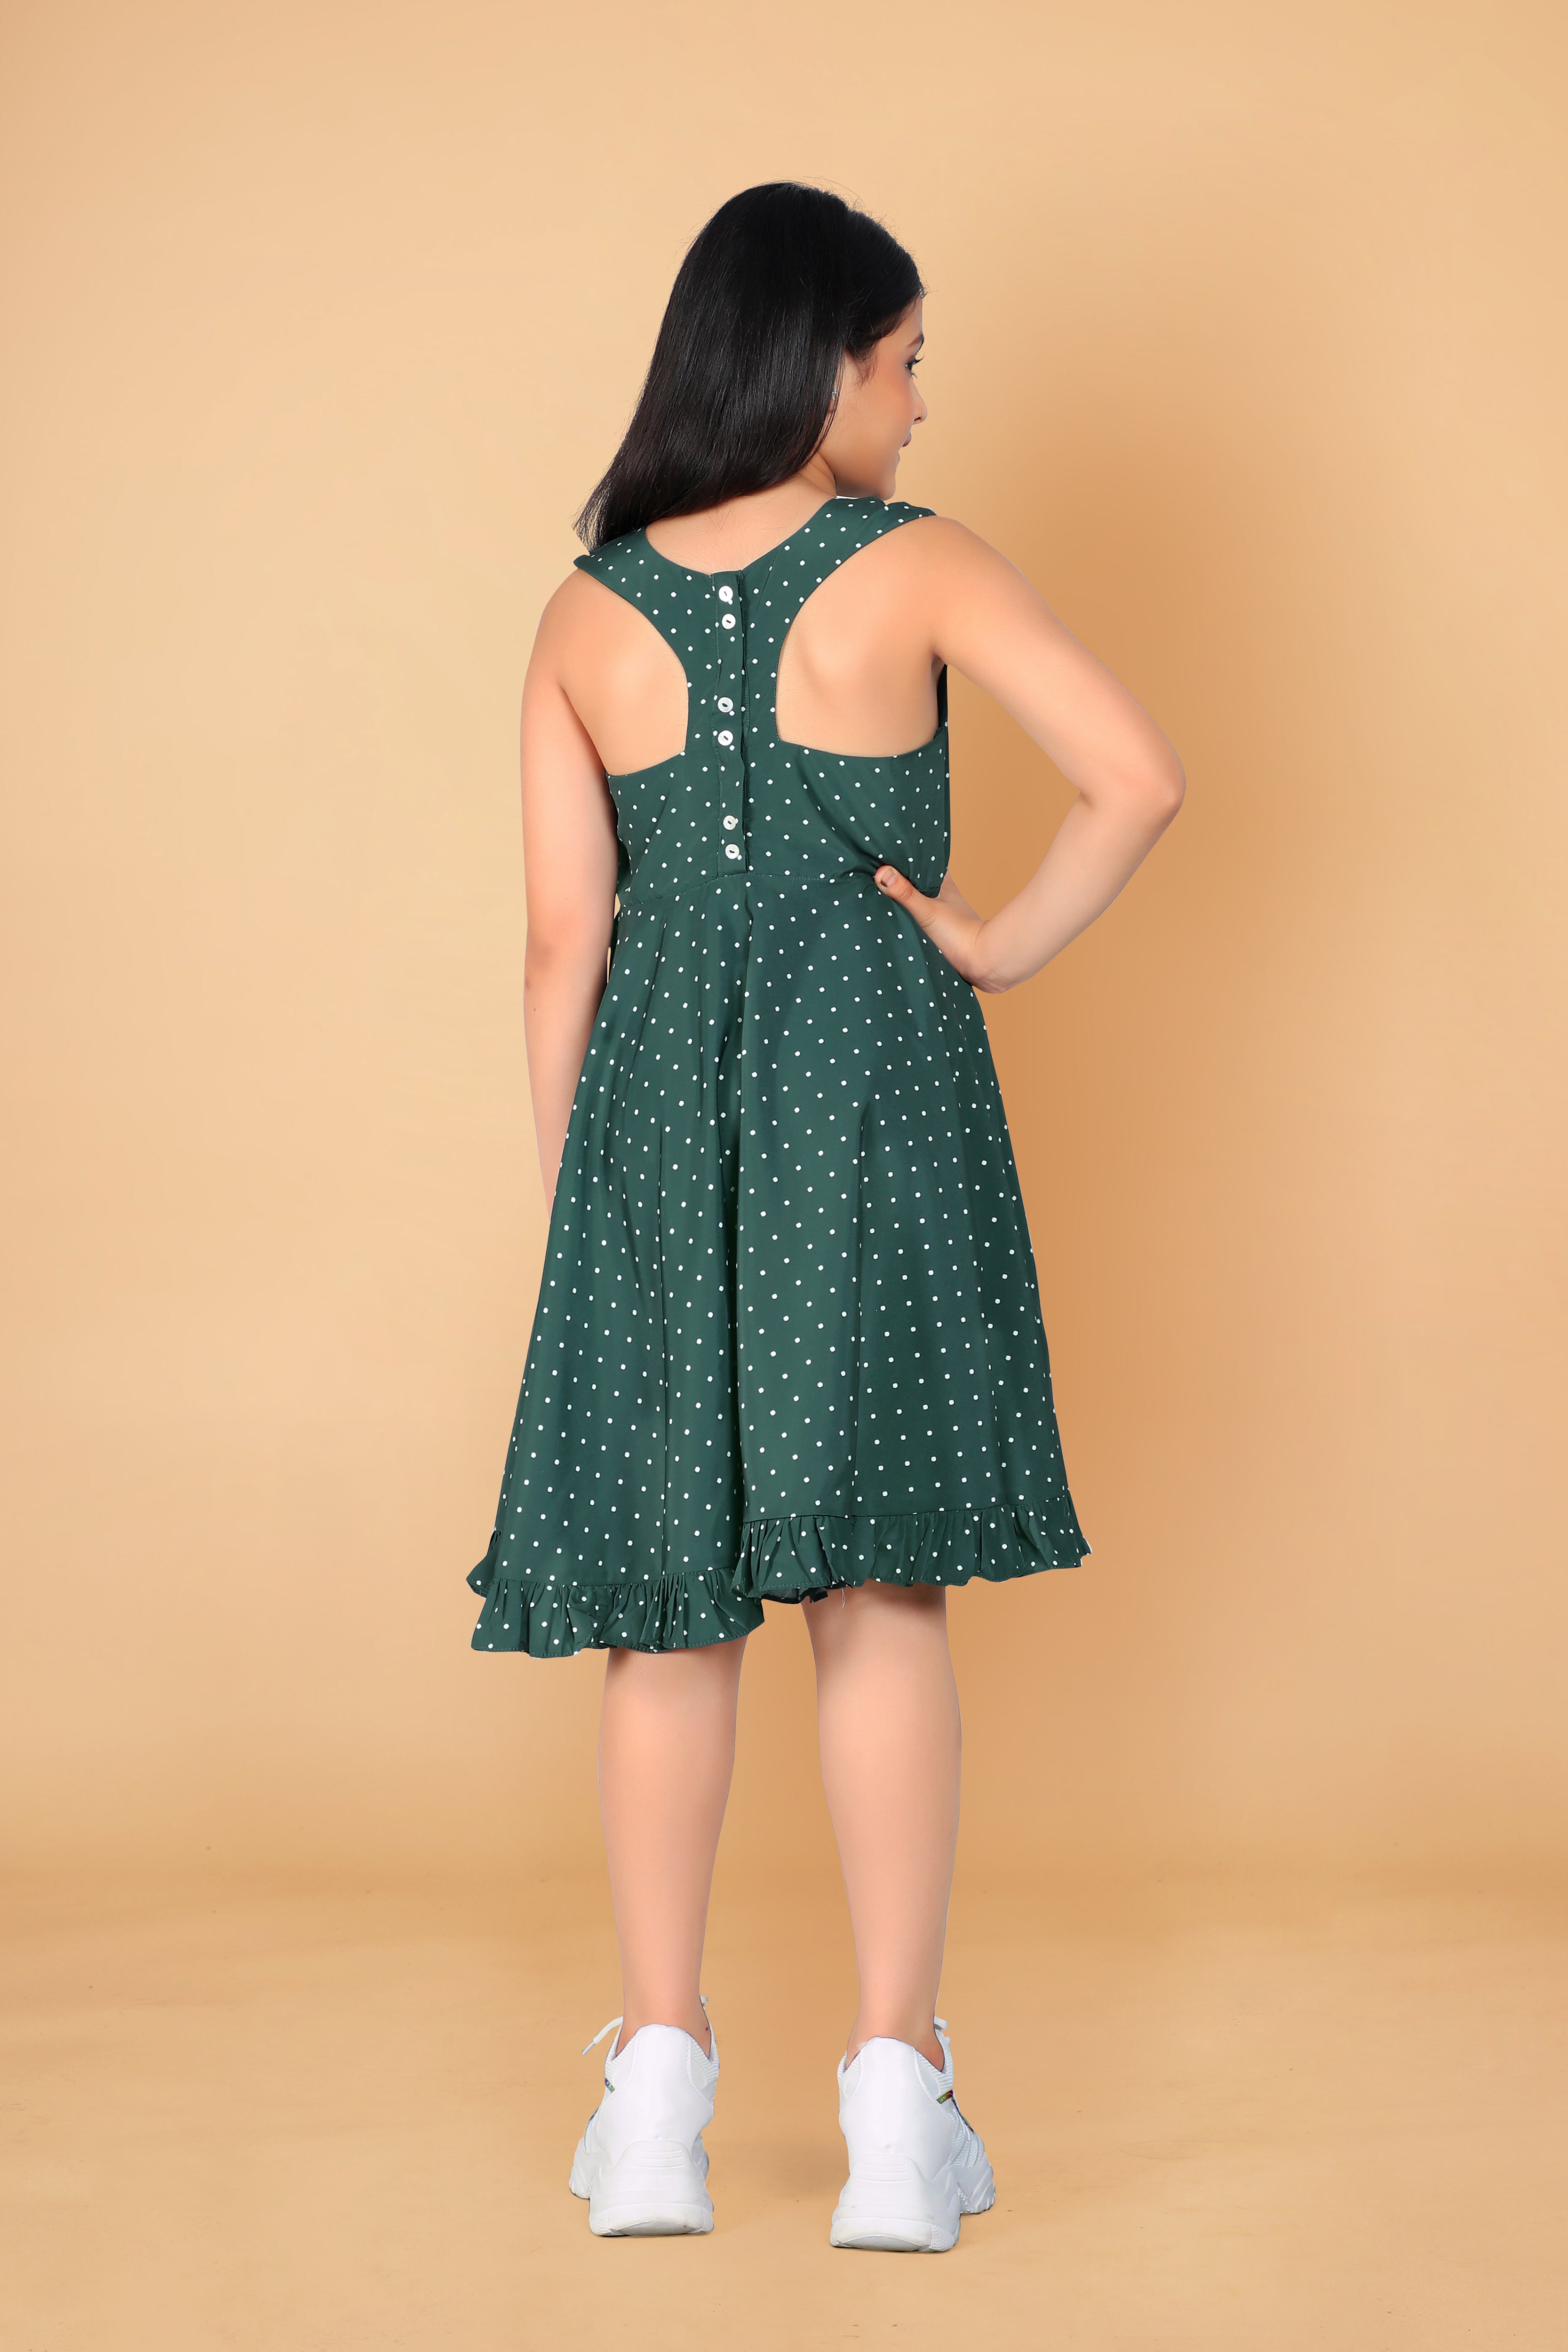 Zara Summer Dresses | Polka dot dress, Dot dress, Green polka dot dress